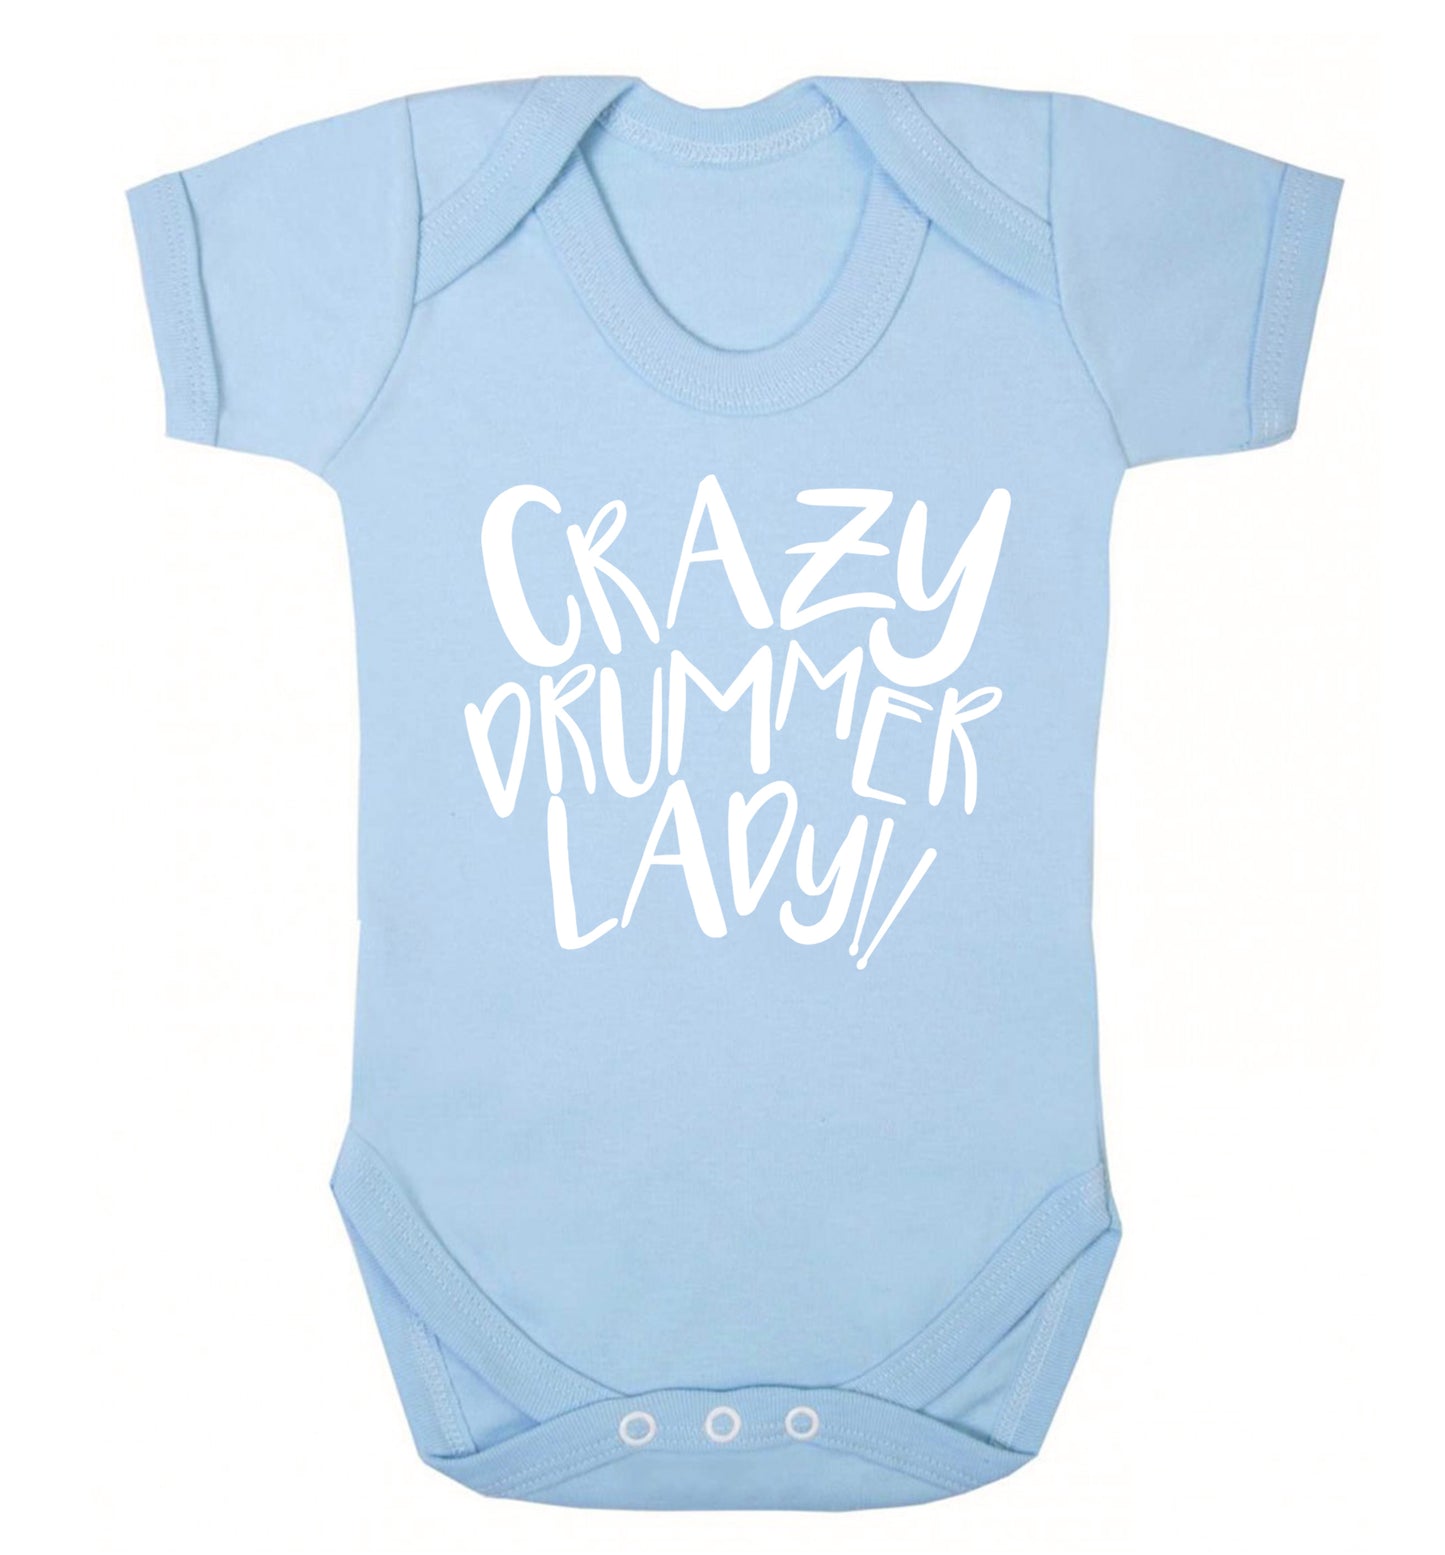 Crazy drummer lady Baby Vest pale blue 18-24 months